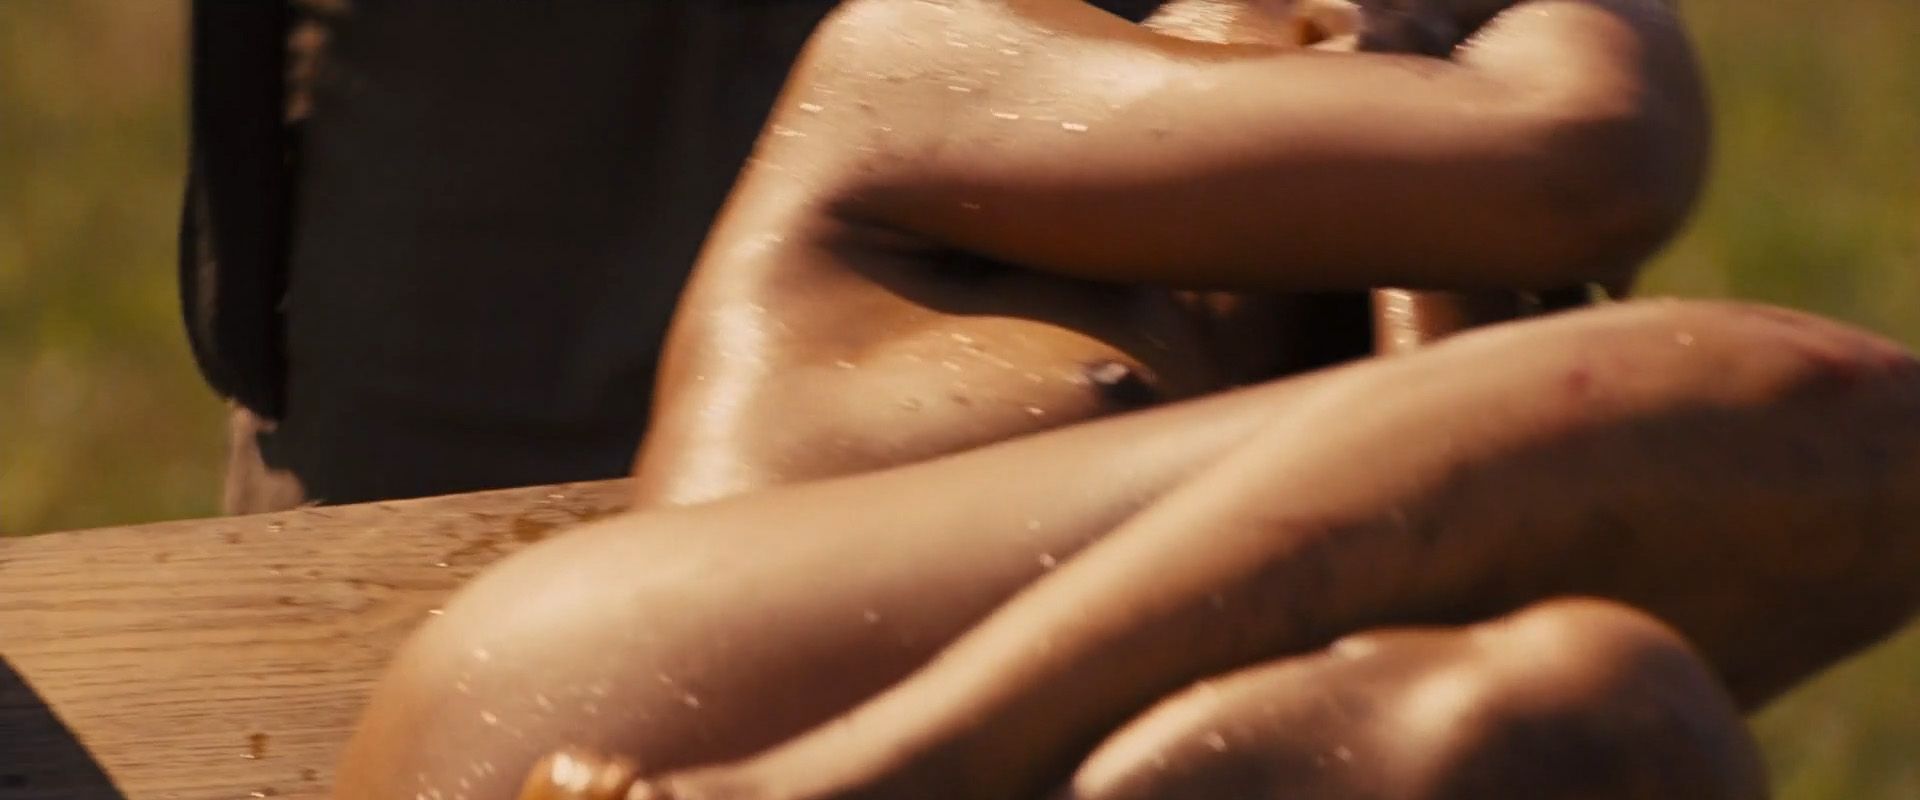 Kerry washington nude sex scenes